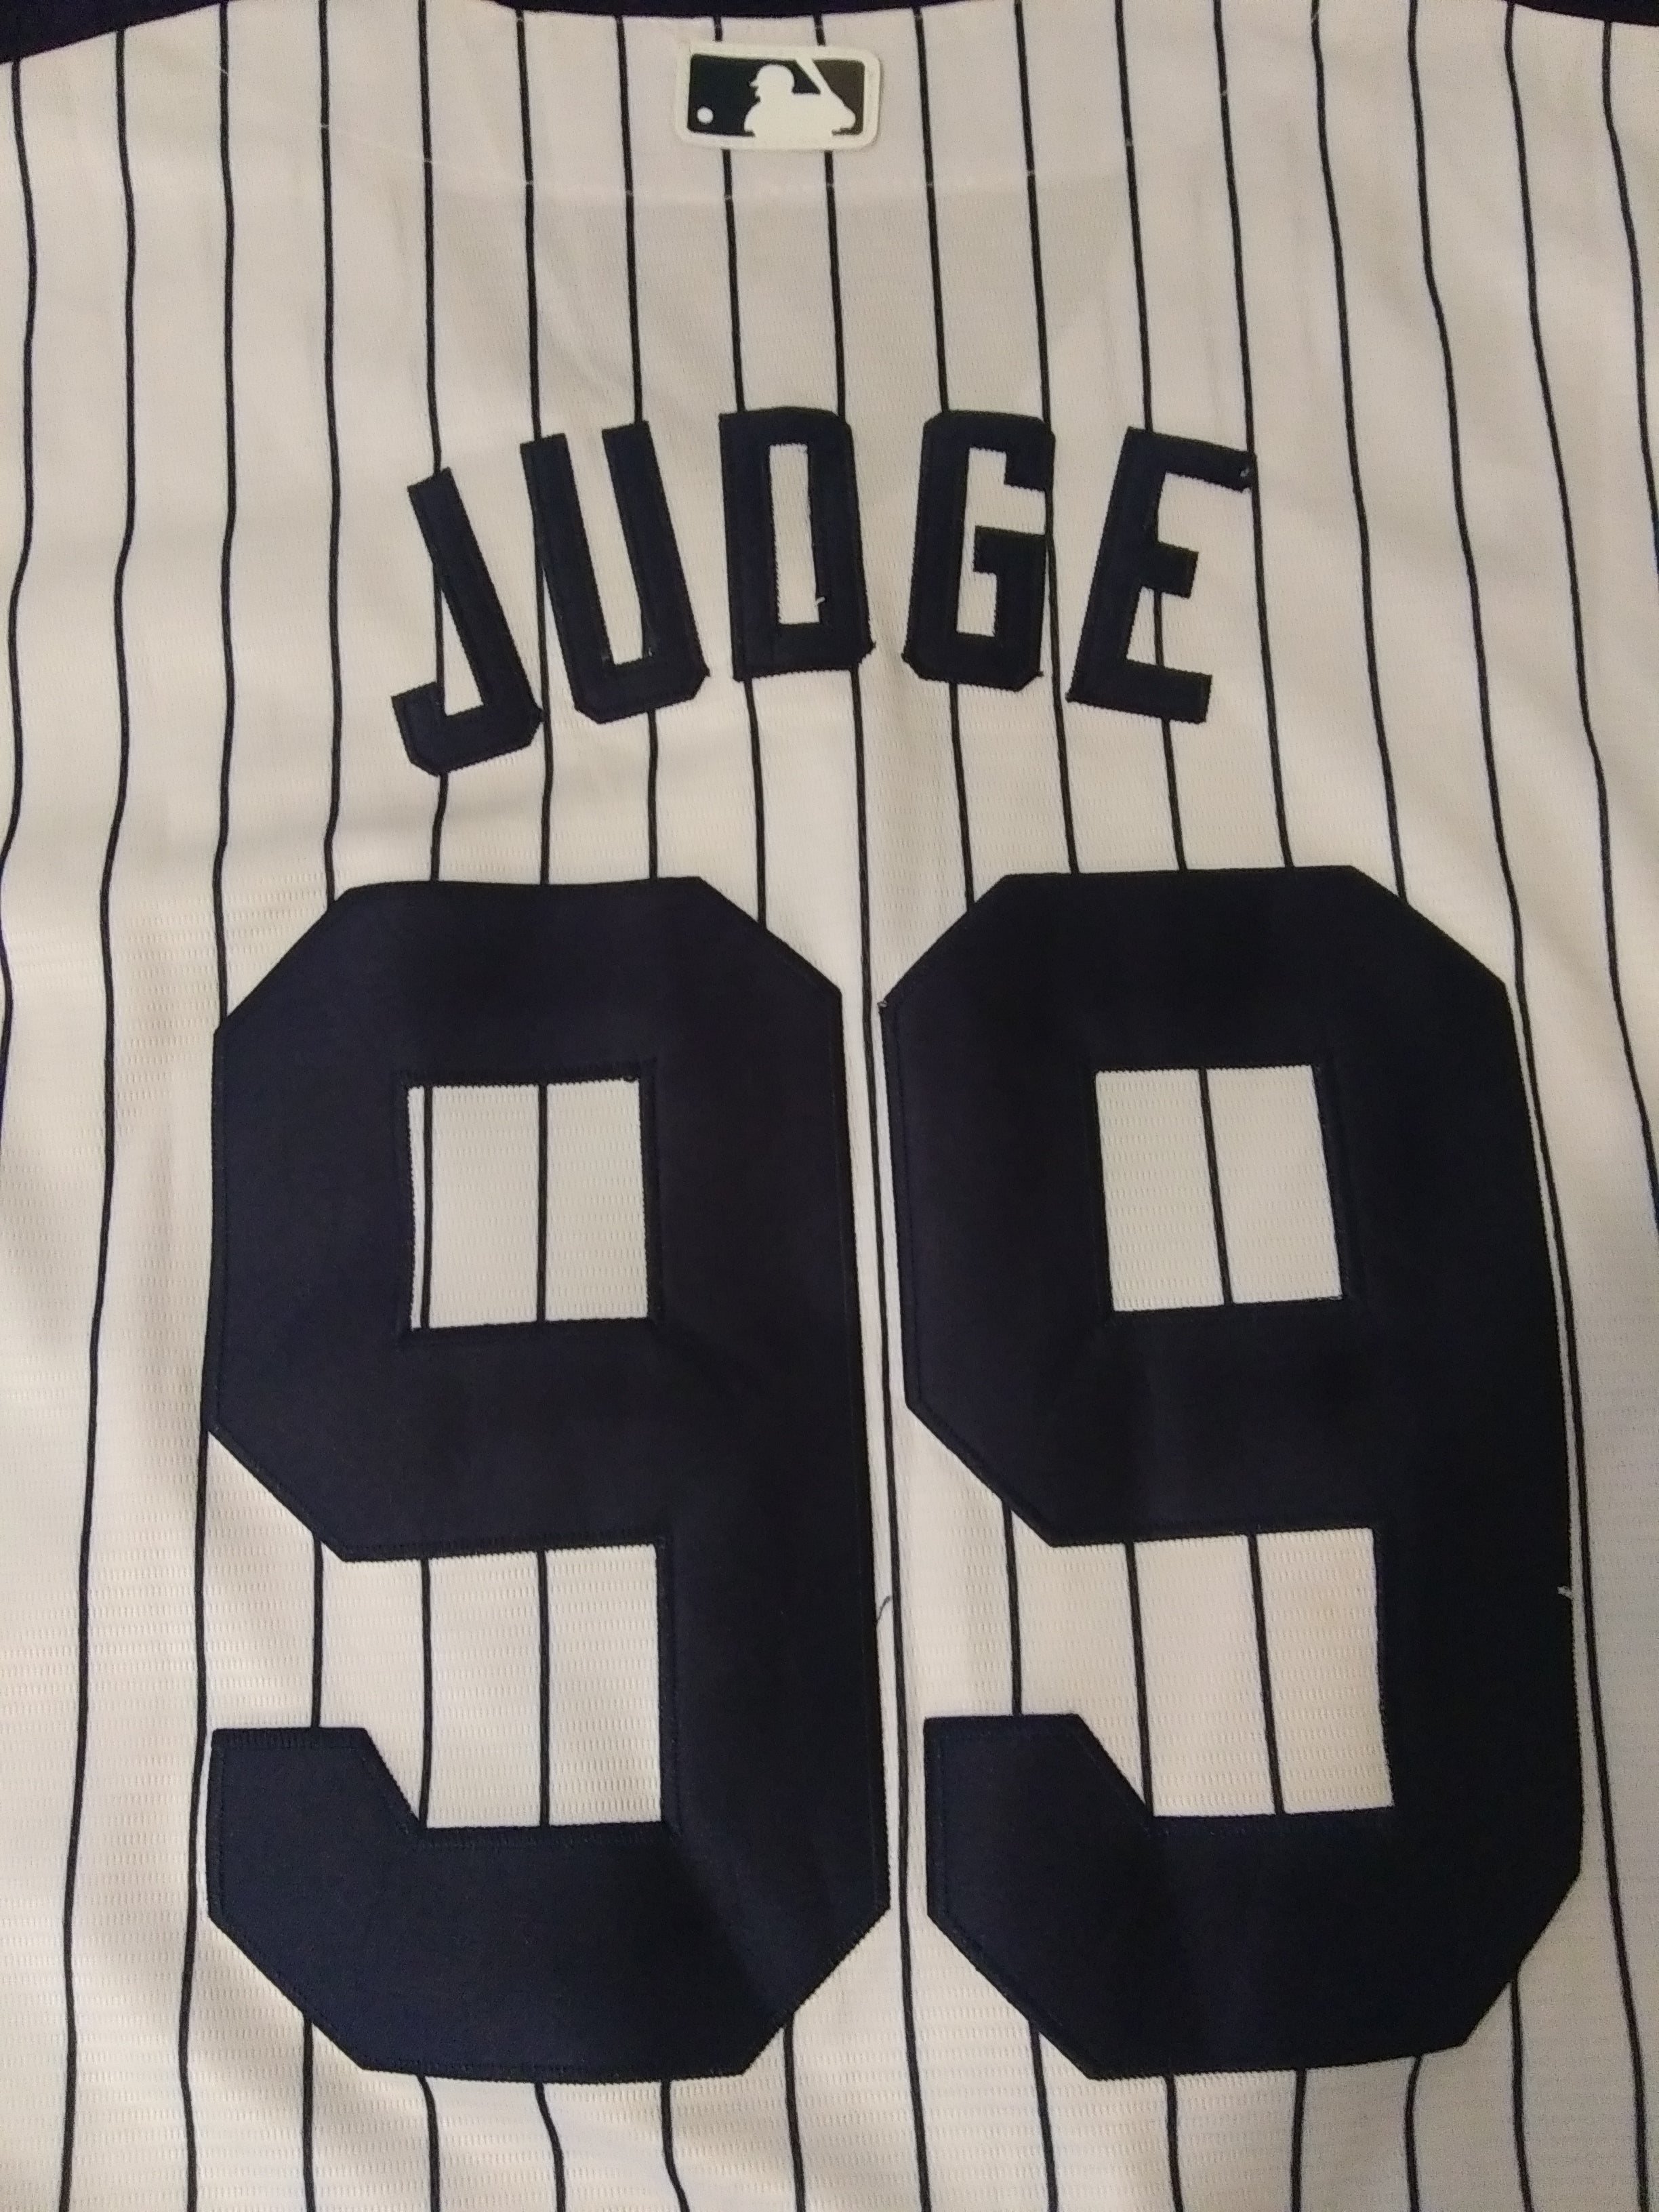 New York Yankees SGA Aaron Judge Basketball Jersey T-Shirt Shirt